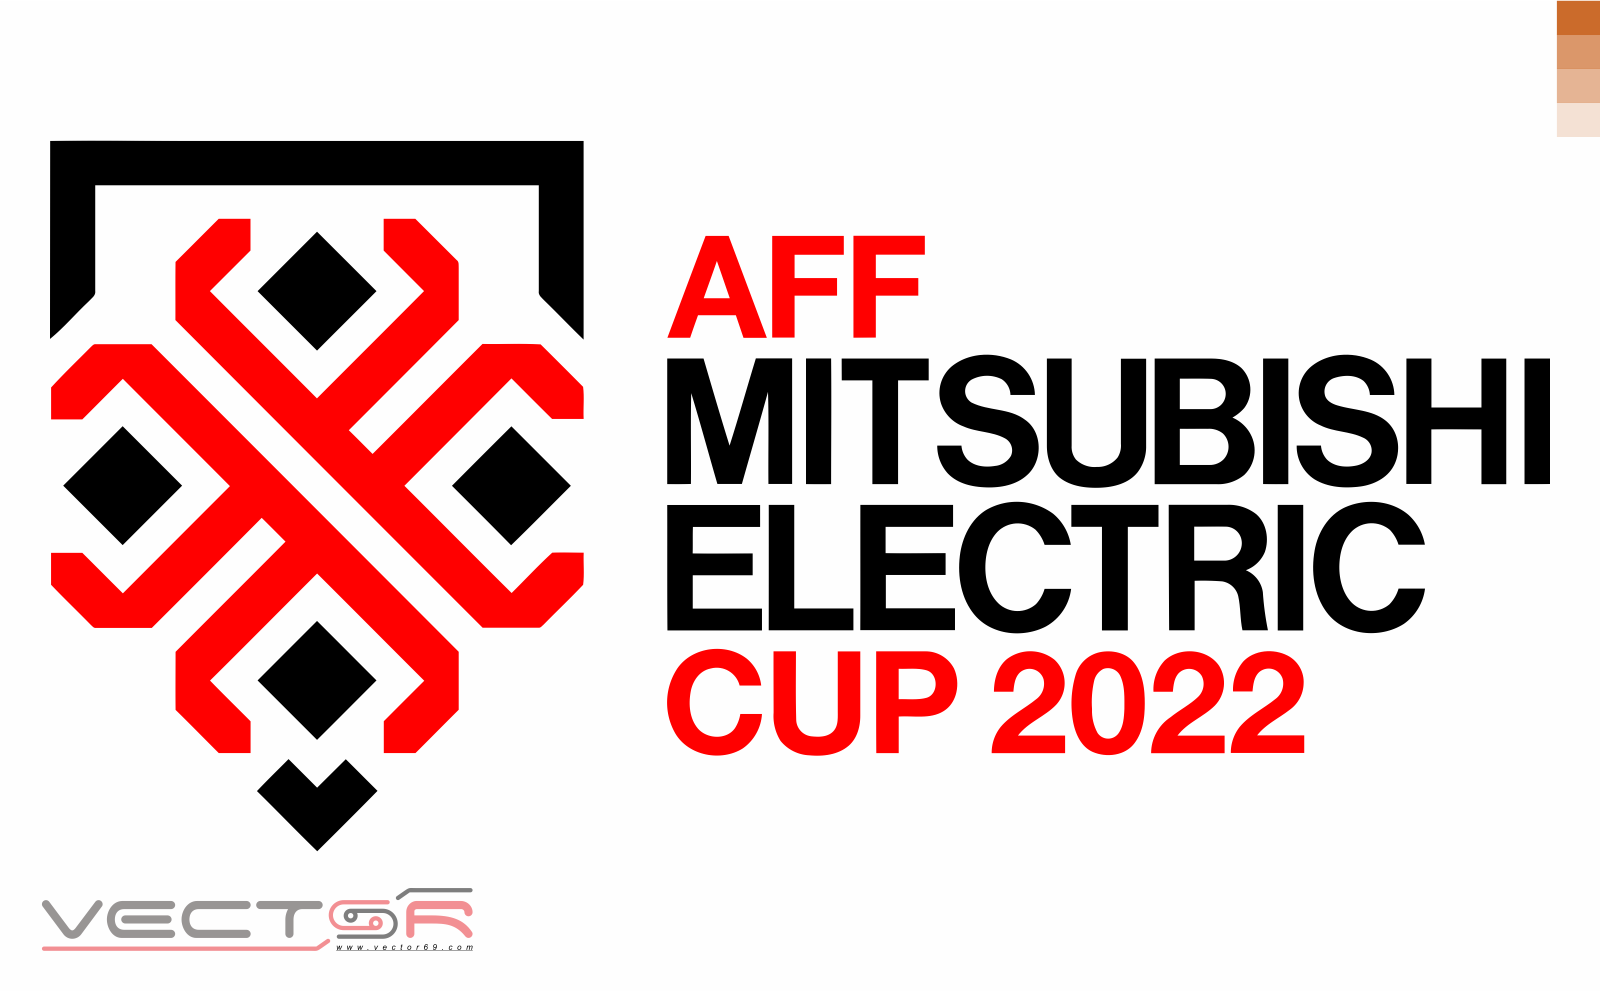 AFF Mitsubishi Electric Cup 2022 Logo - Download Vector File AI (Adobe Illustrator)